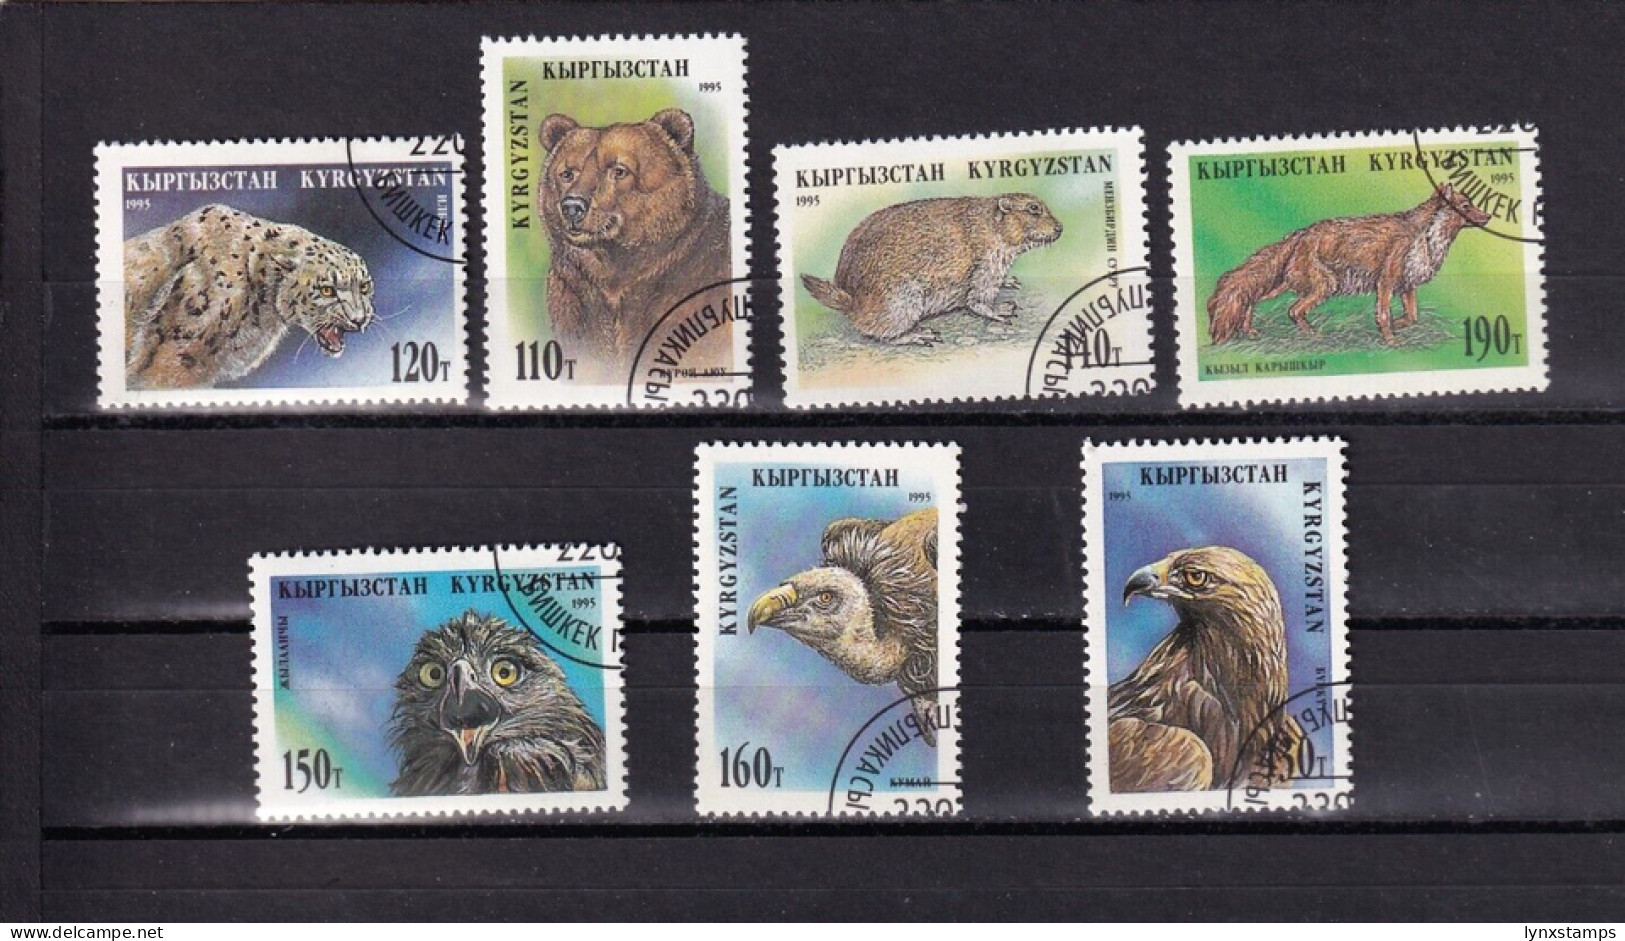 LI02 Kyrgyzstan 1995 Fauna Of Kyrgyzstan Full Set Used Stamps - Kyrgyzstan